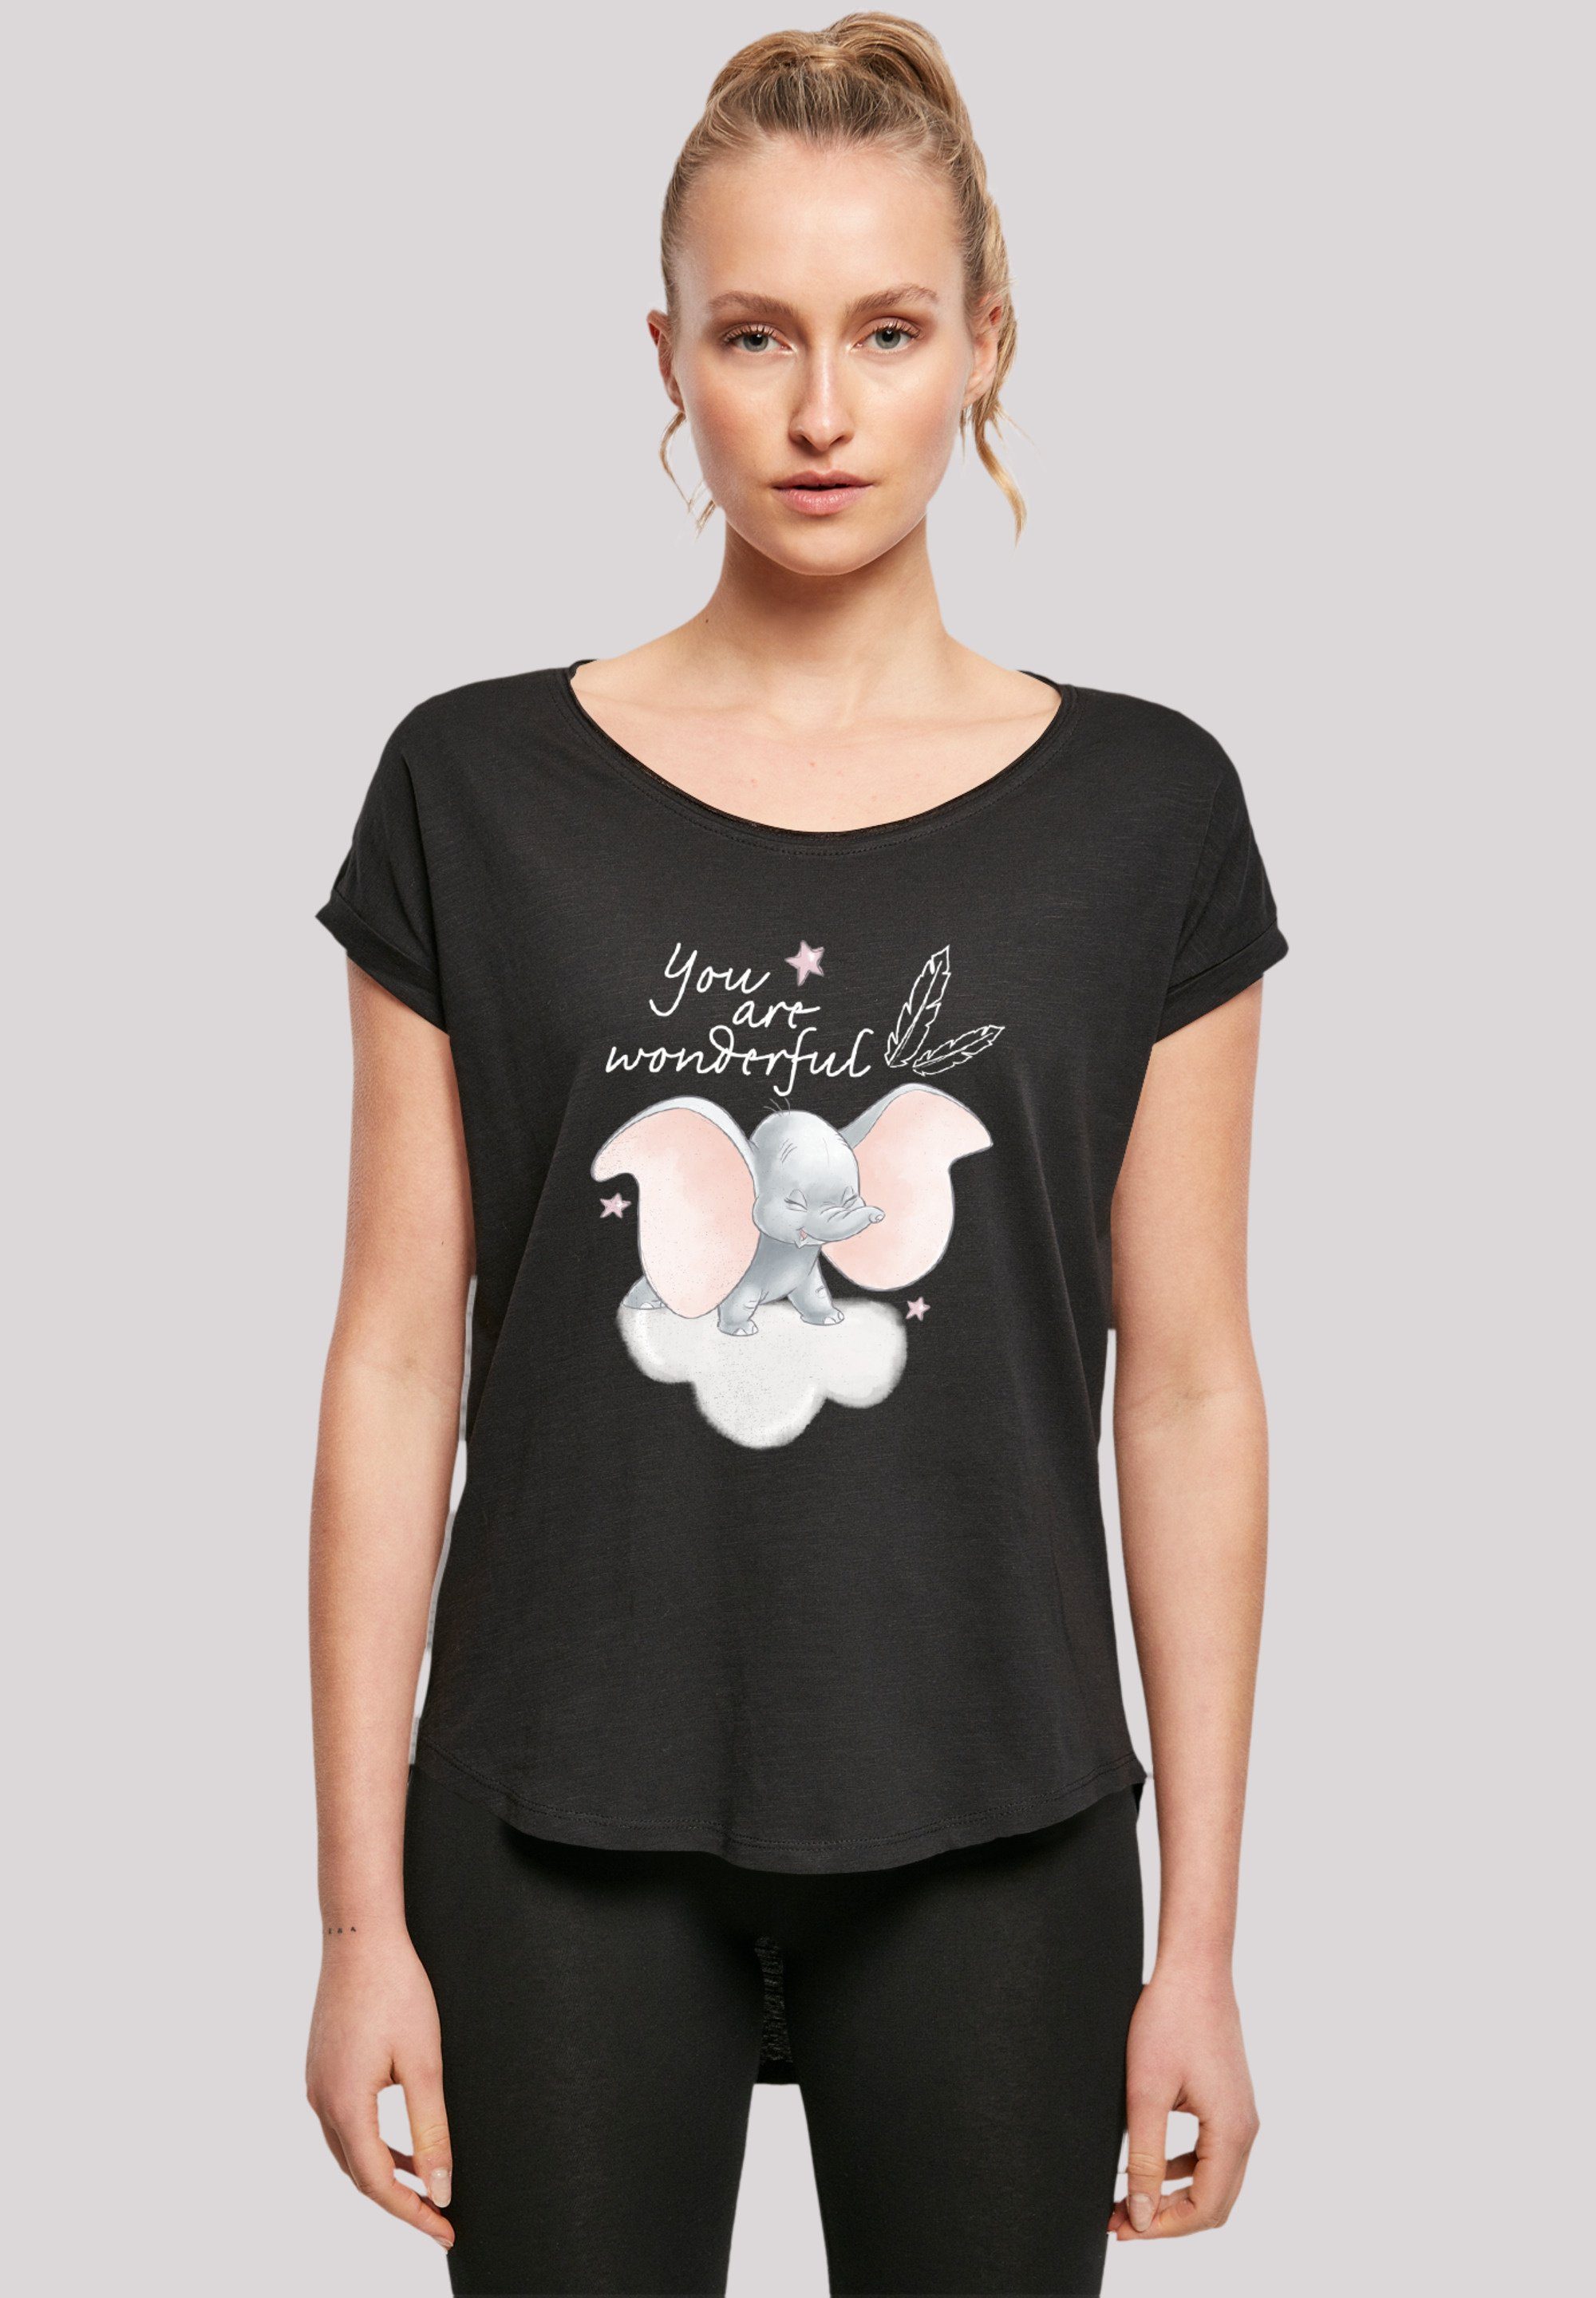 Dumbo T-Shirt Qualität Premium Wonderful Are You Disney F4NT4STIC